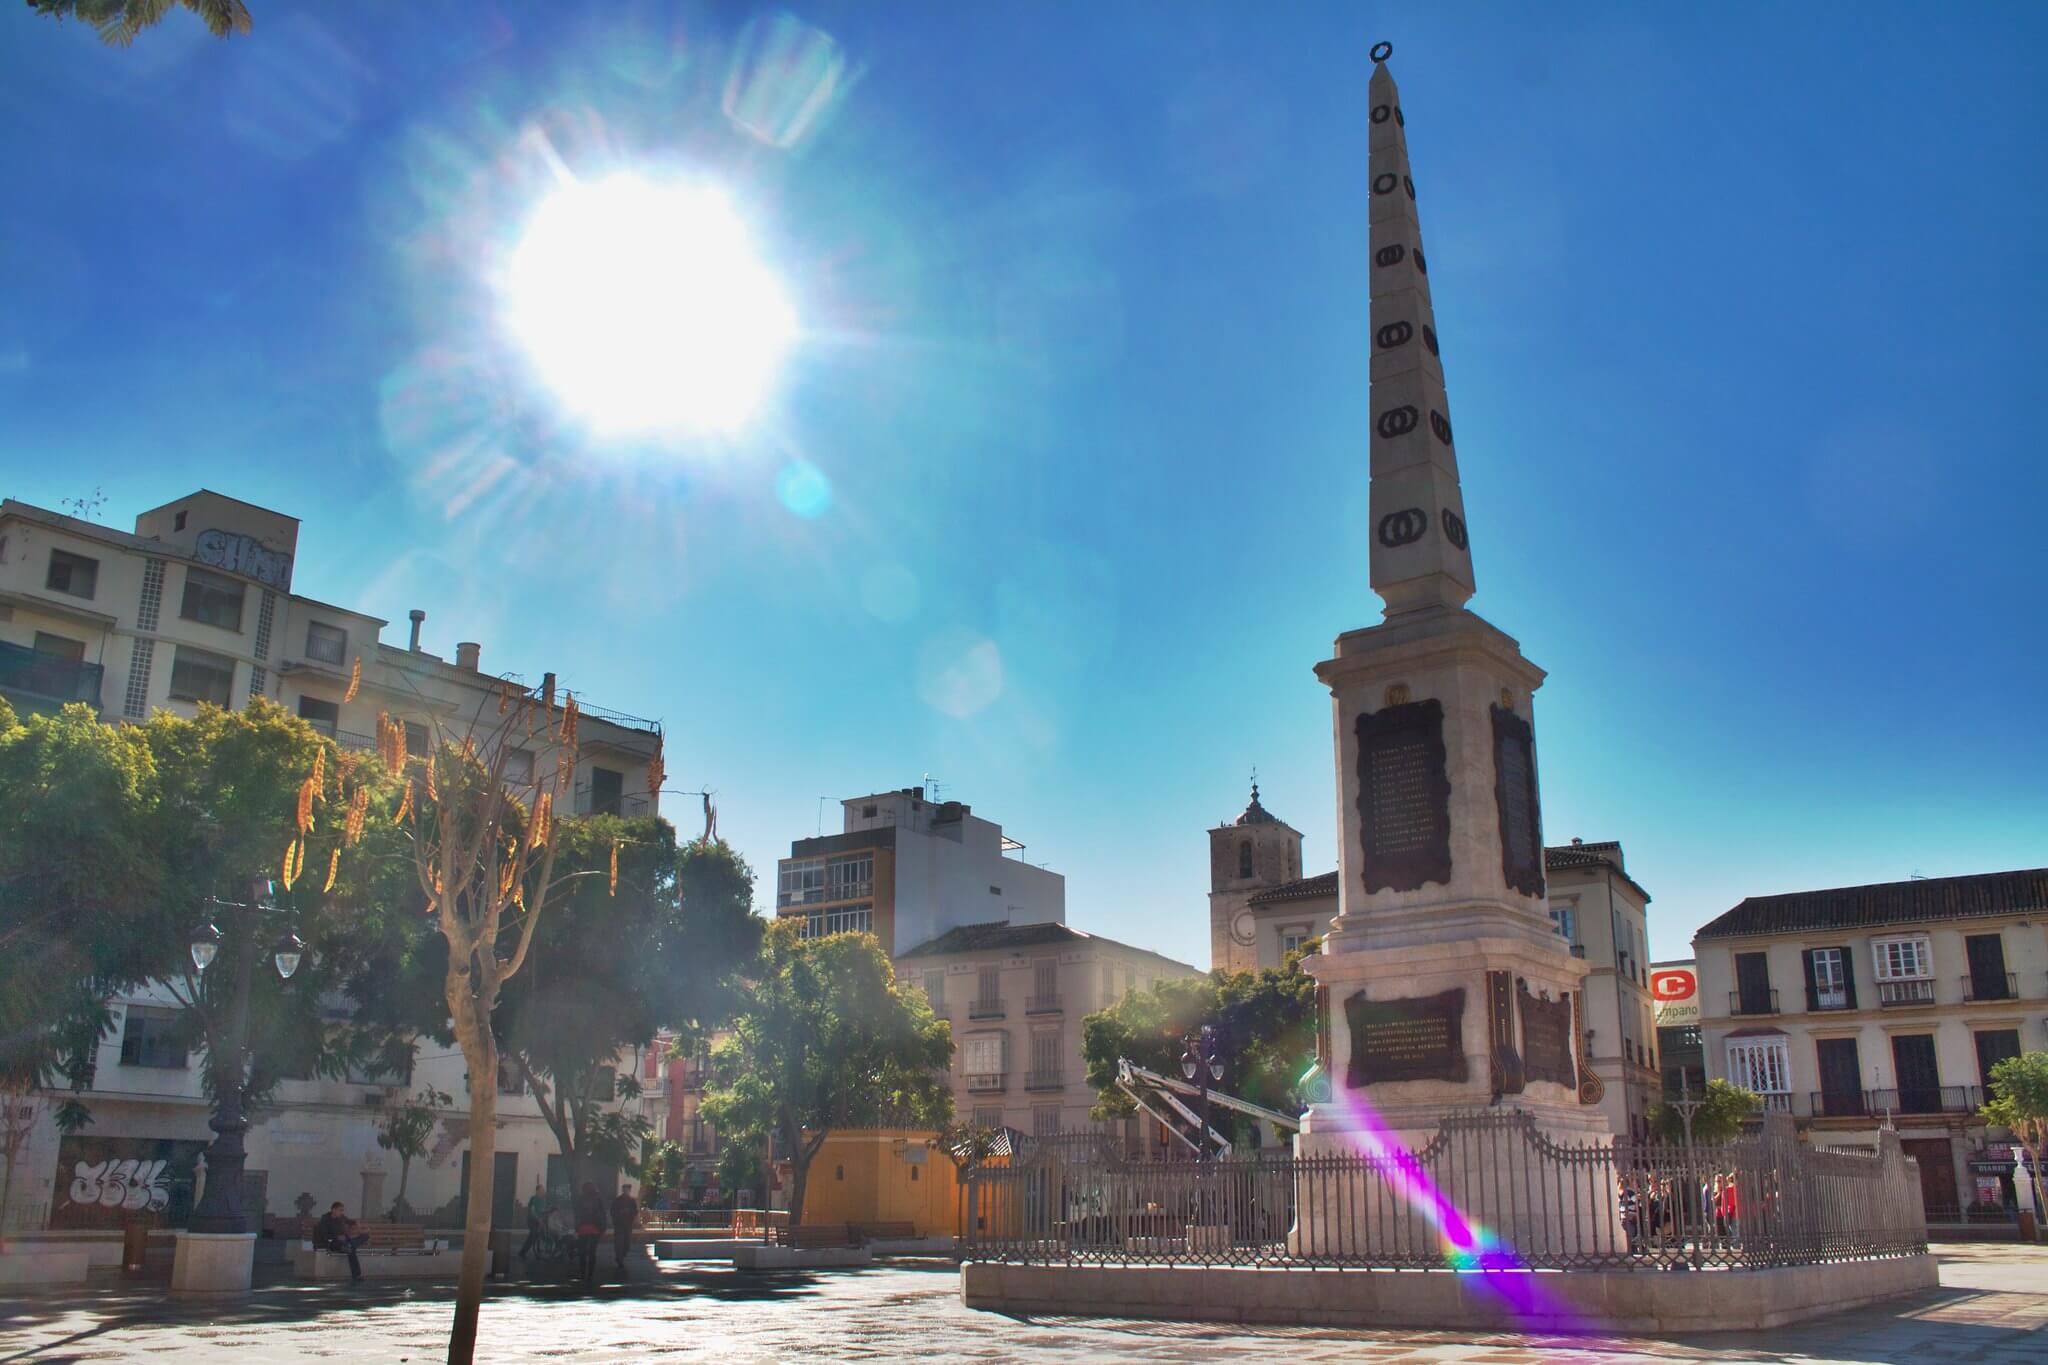 Plaza de la Merced. Fuente: Gotardo González 